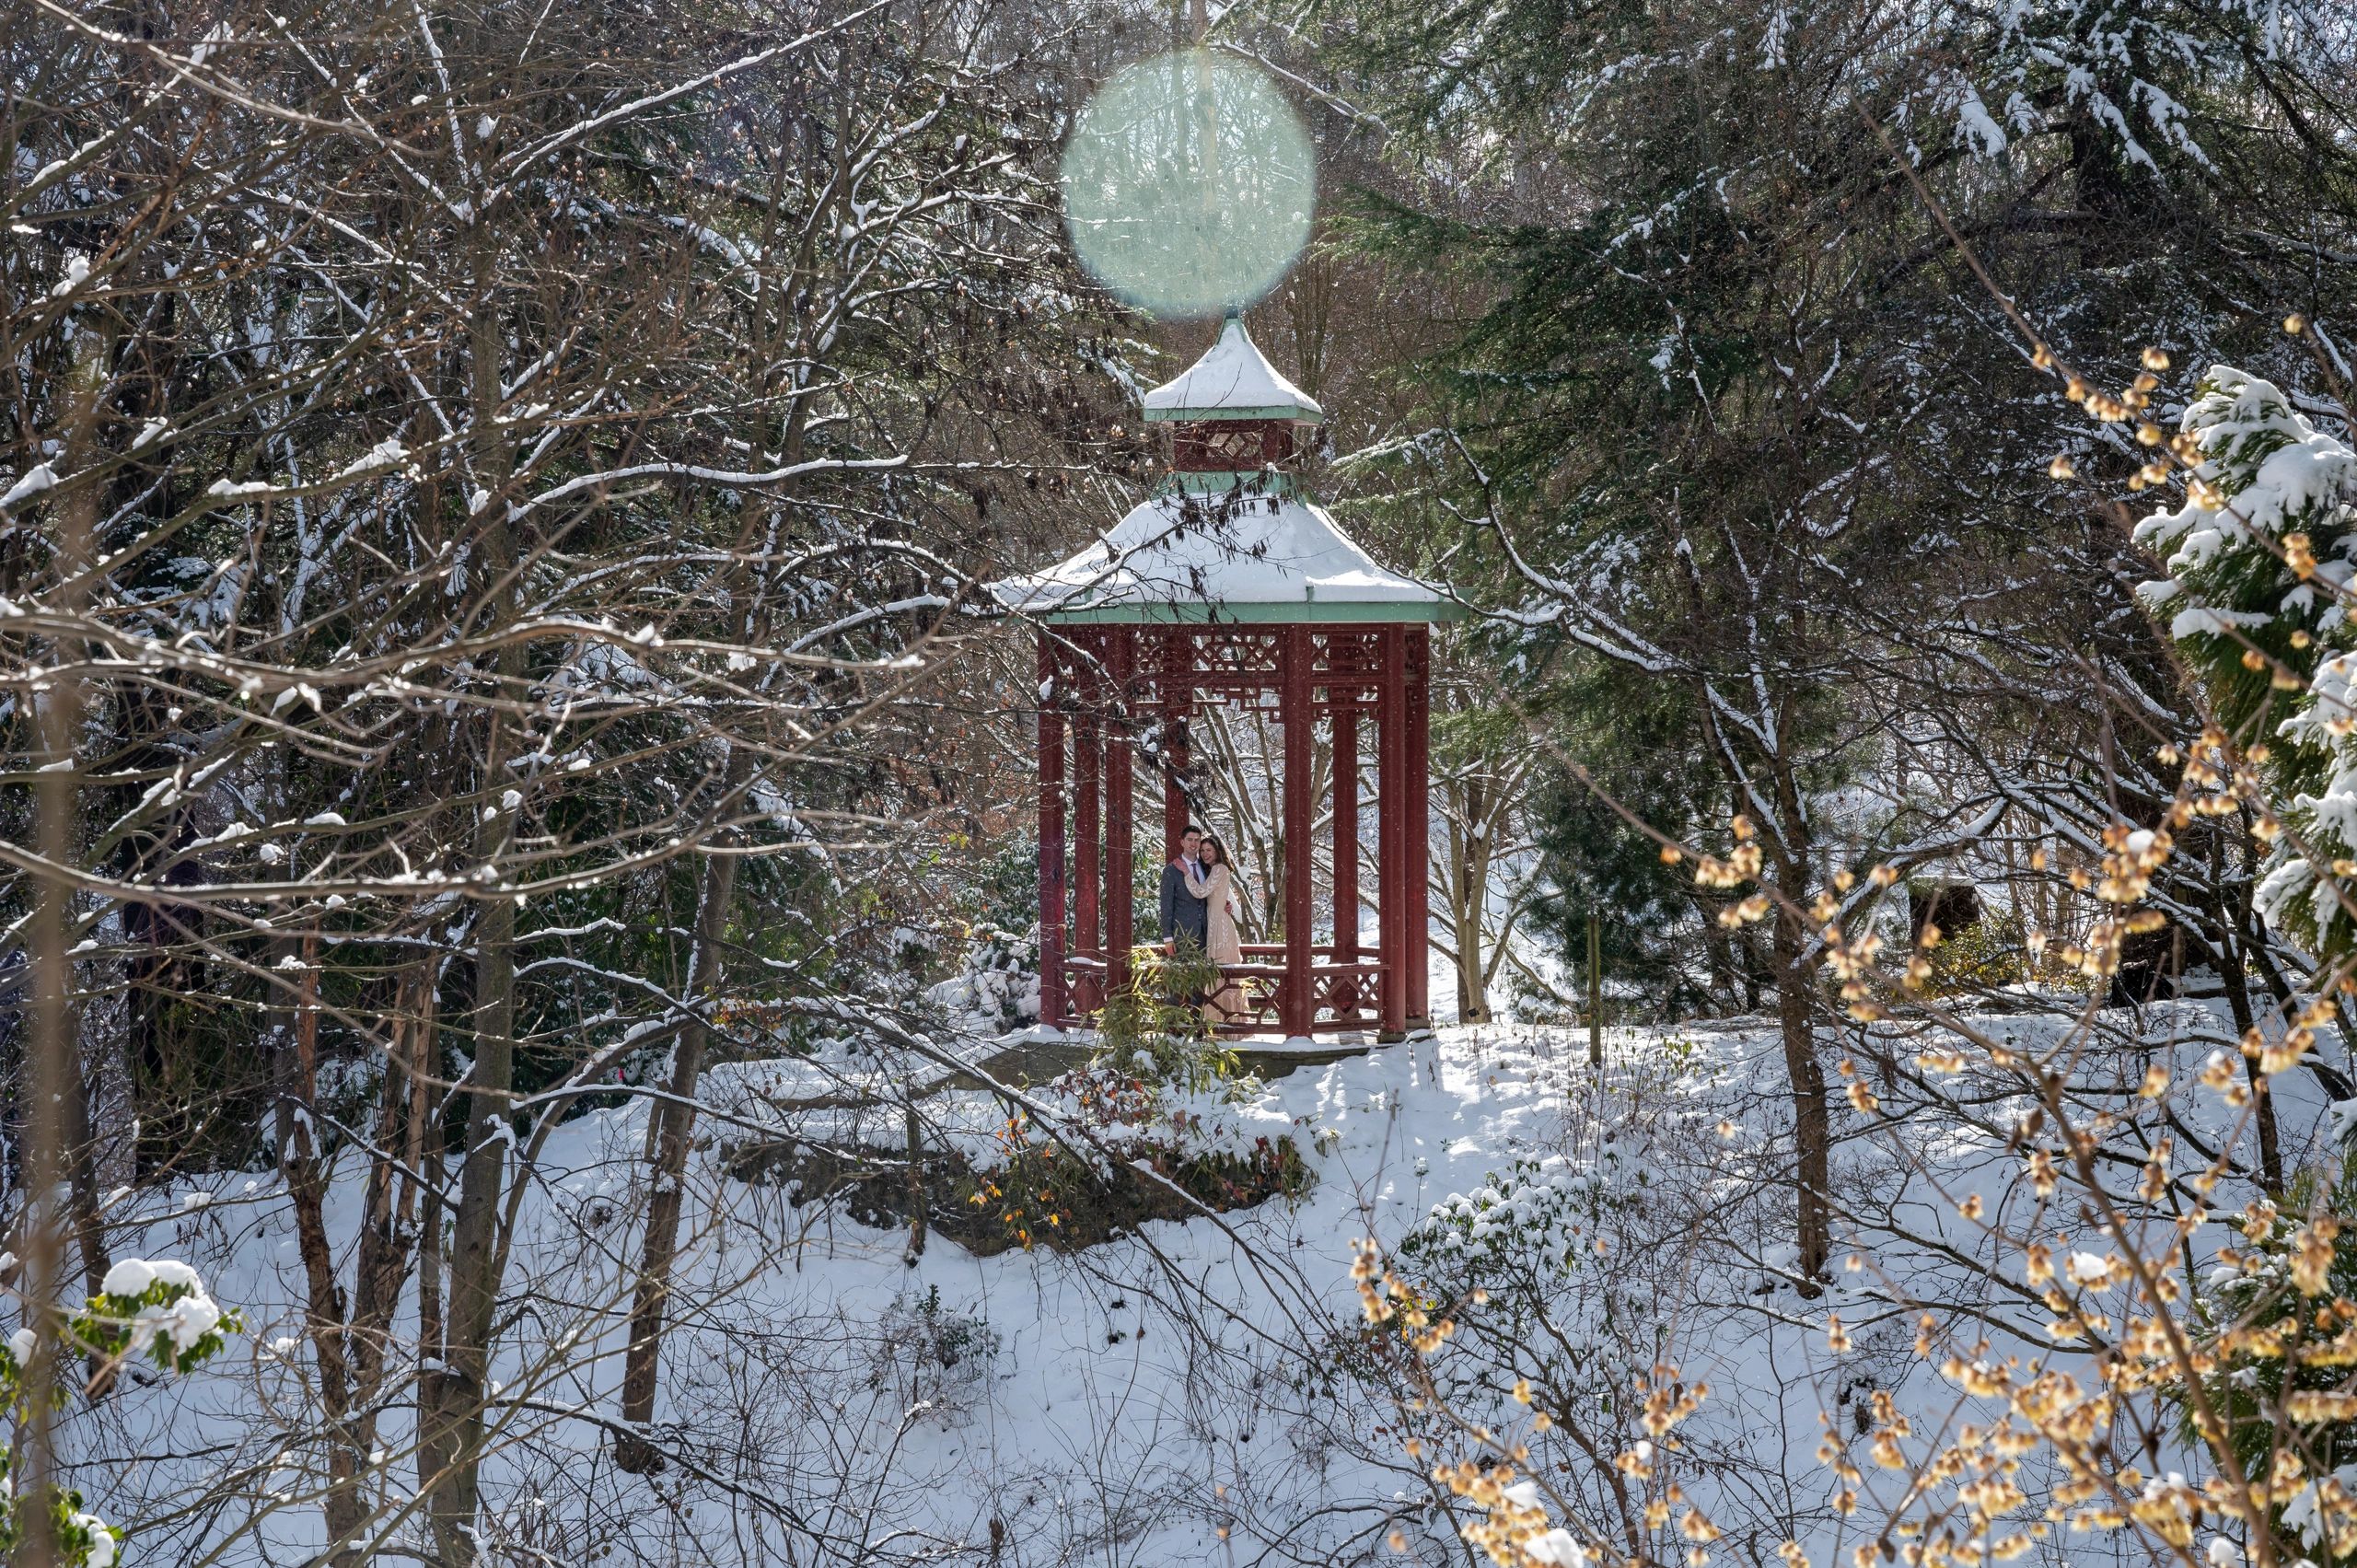 Winter Wonderland
-
Arboretum
Washington, DC